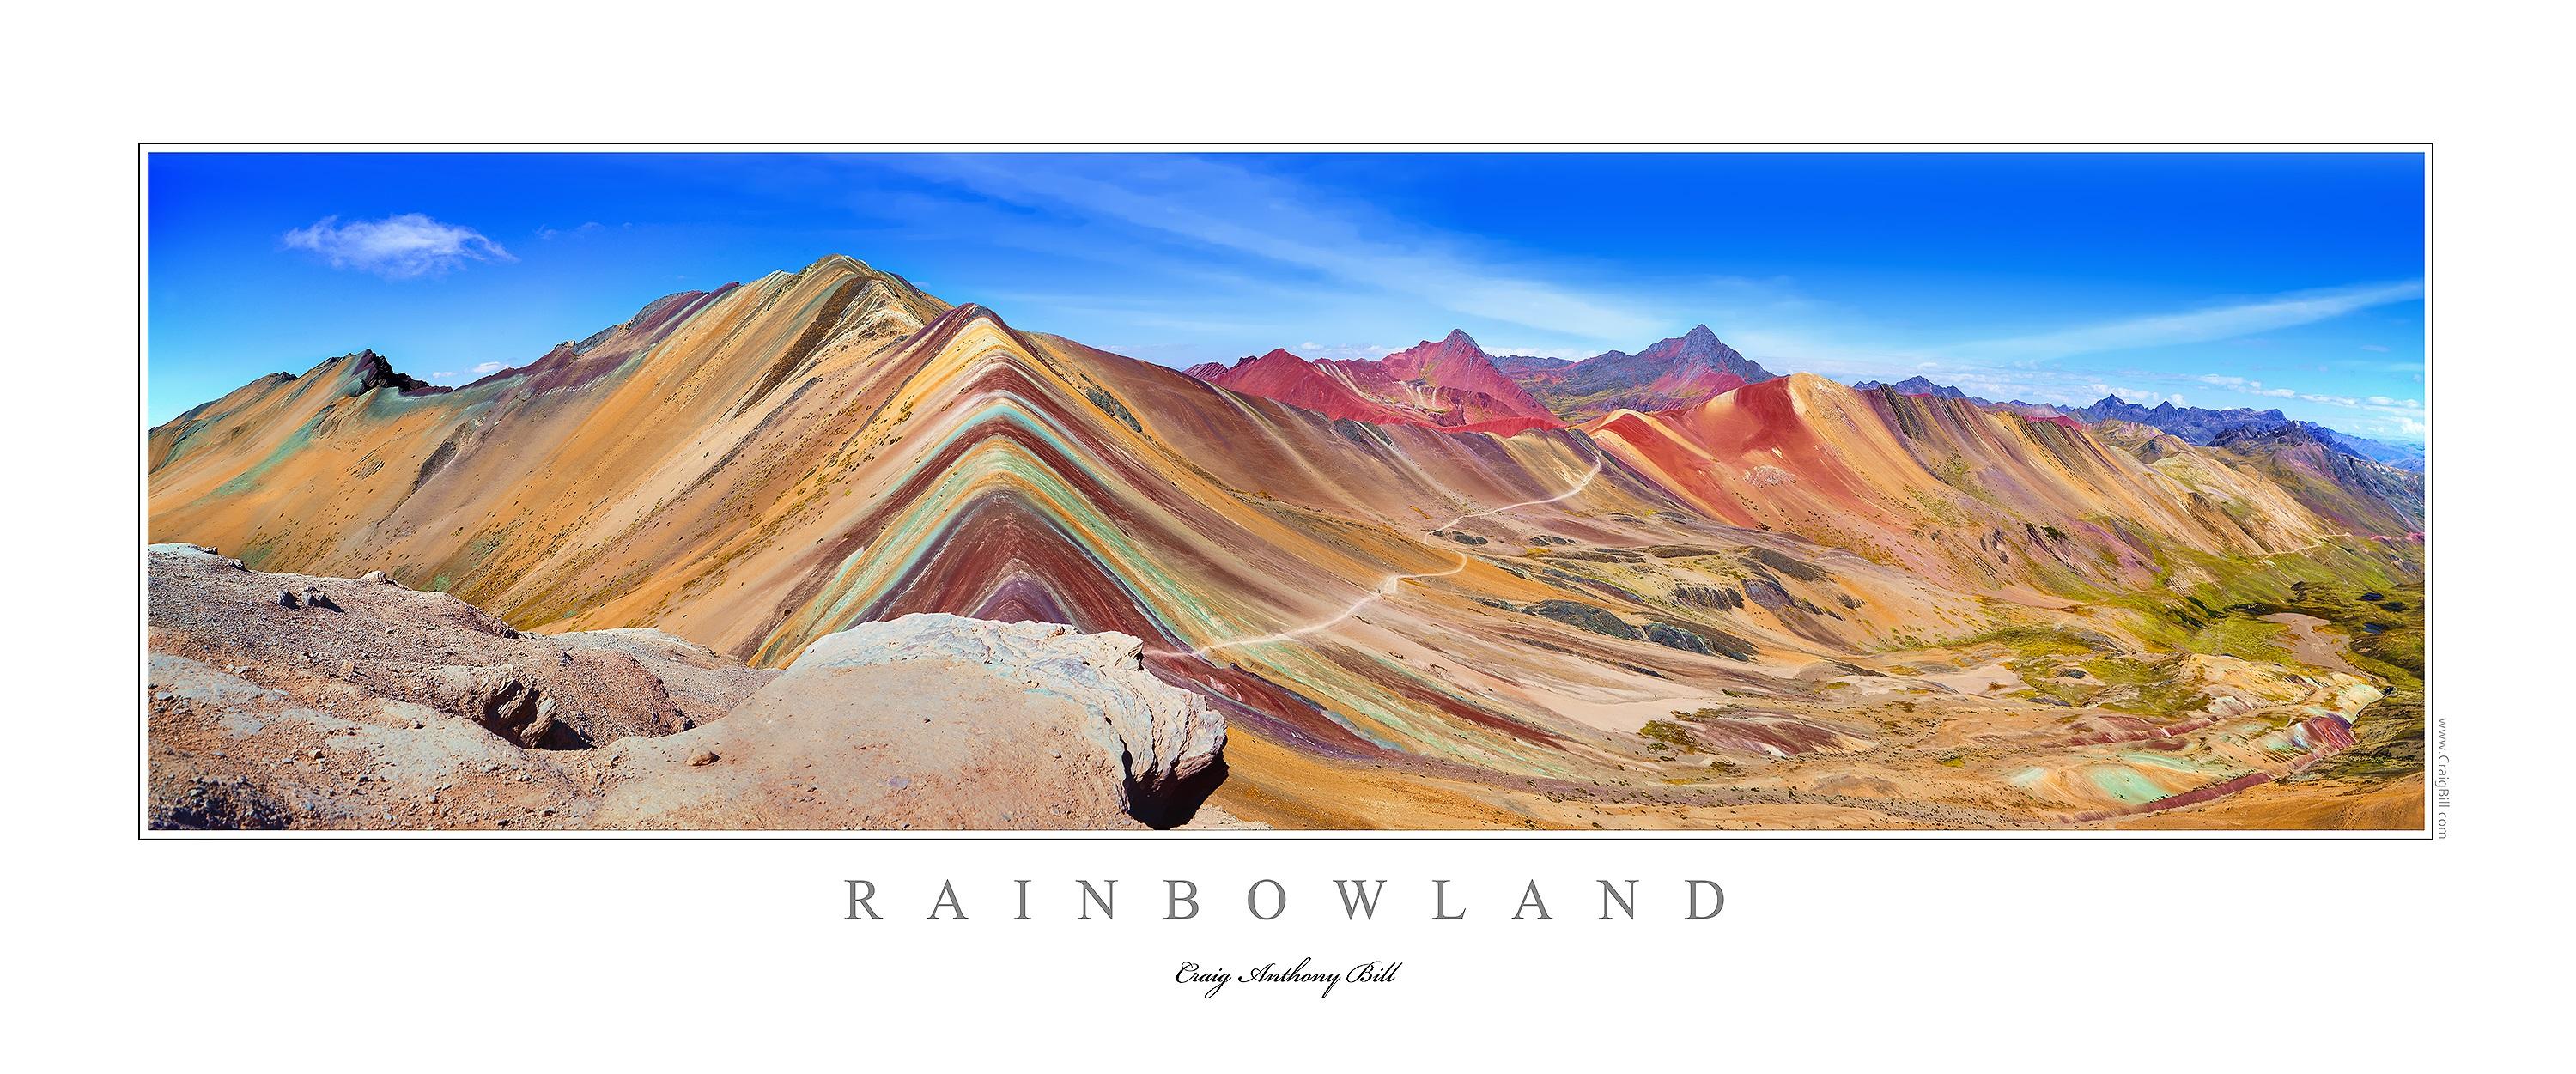 Craig Bill Landscape Print - "Rainbowland" - Edition of 25 - Acrylic ***Gift Image Eligible***